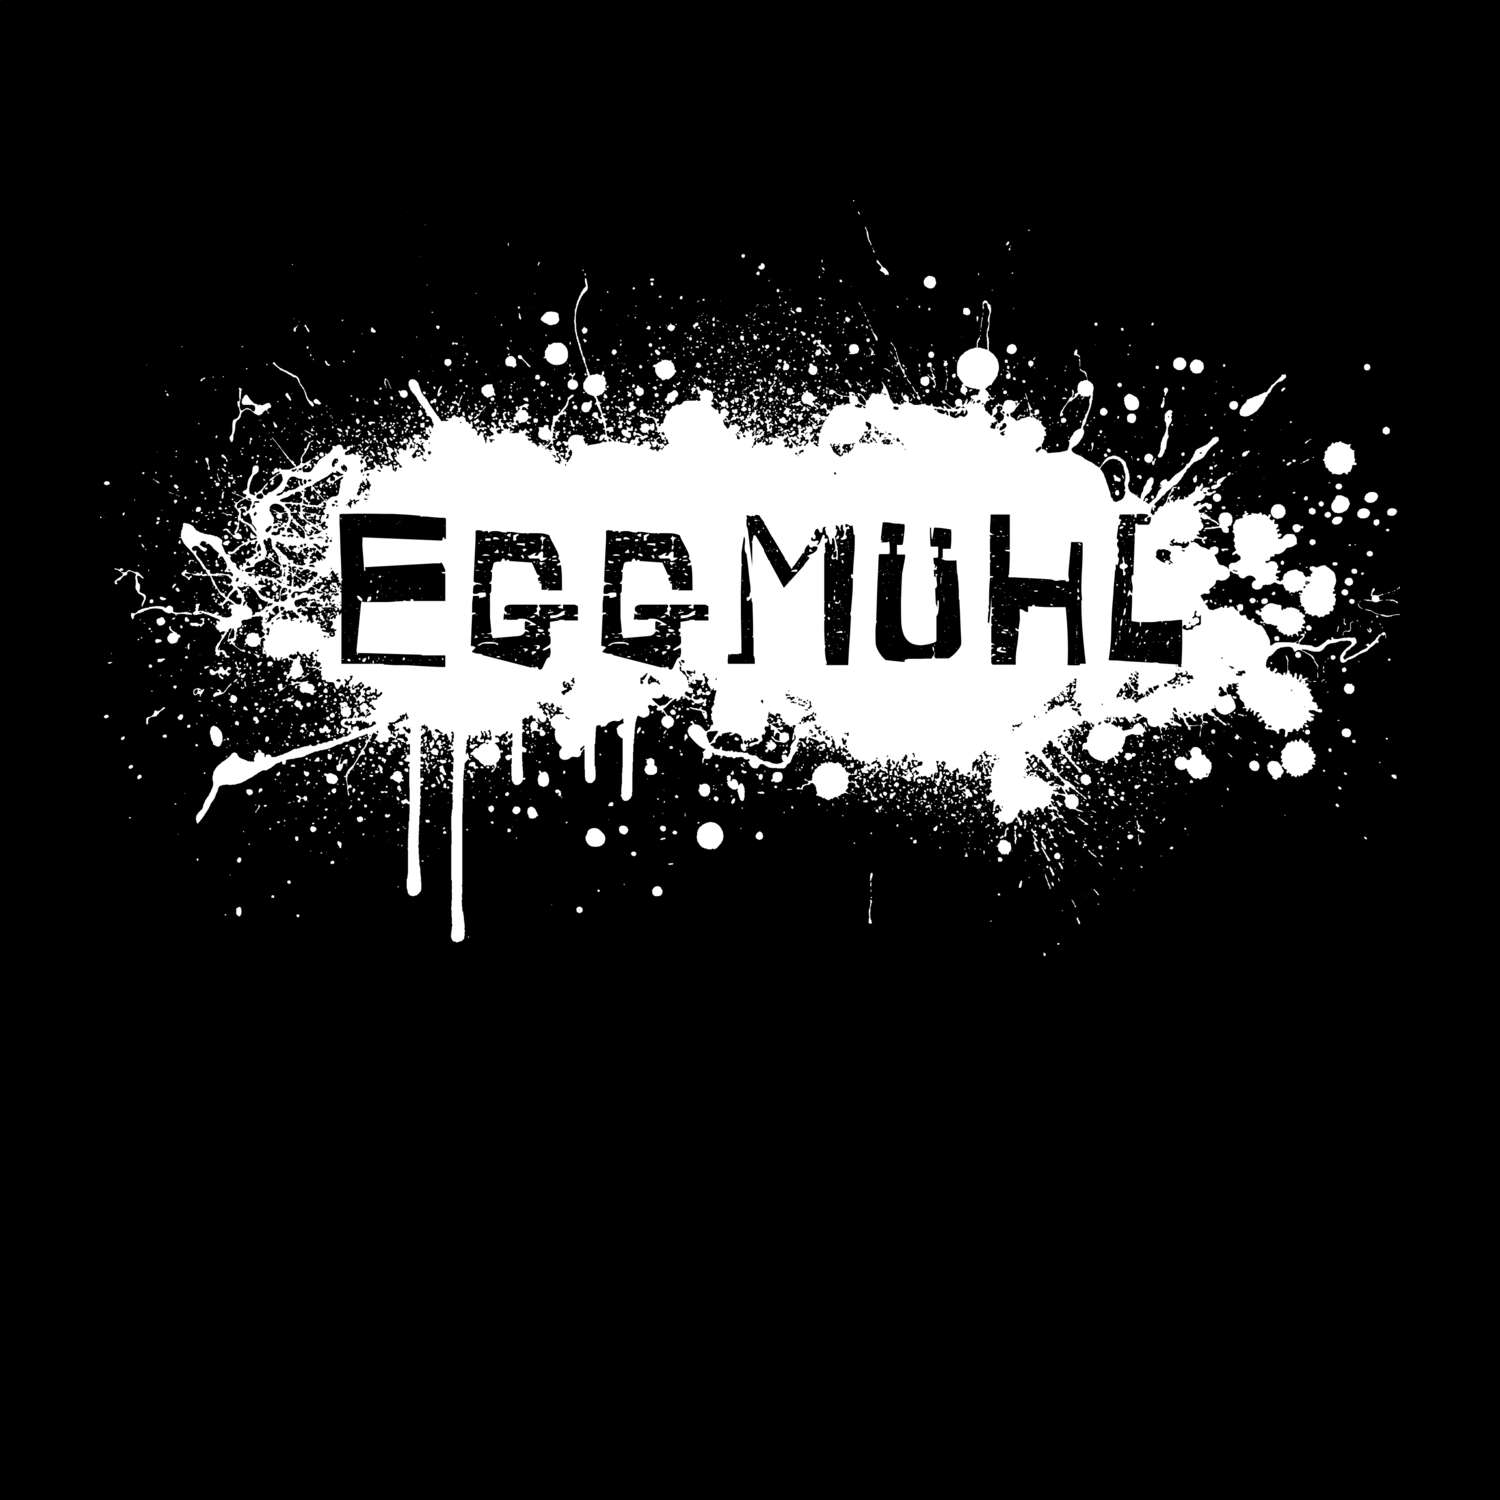 Eggmühl T-Shirt »Paint Splash Punk«